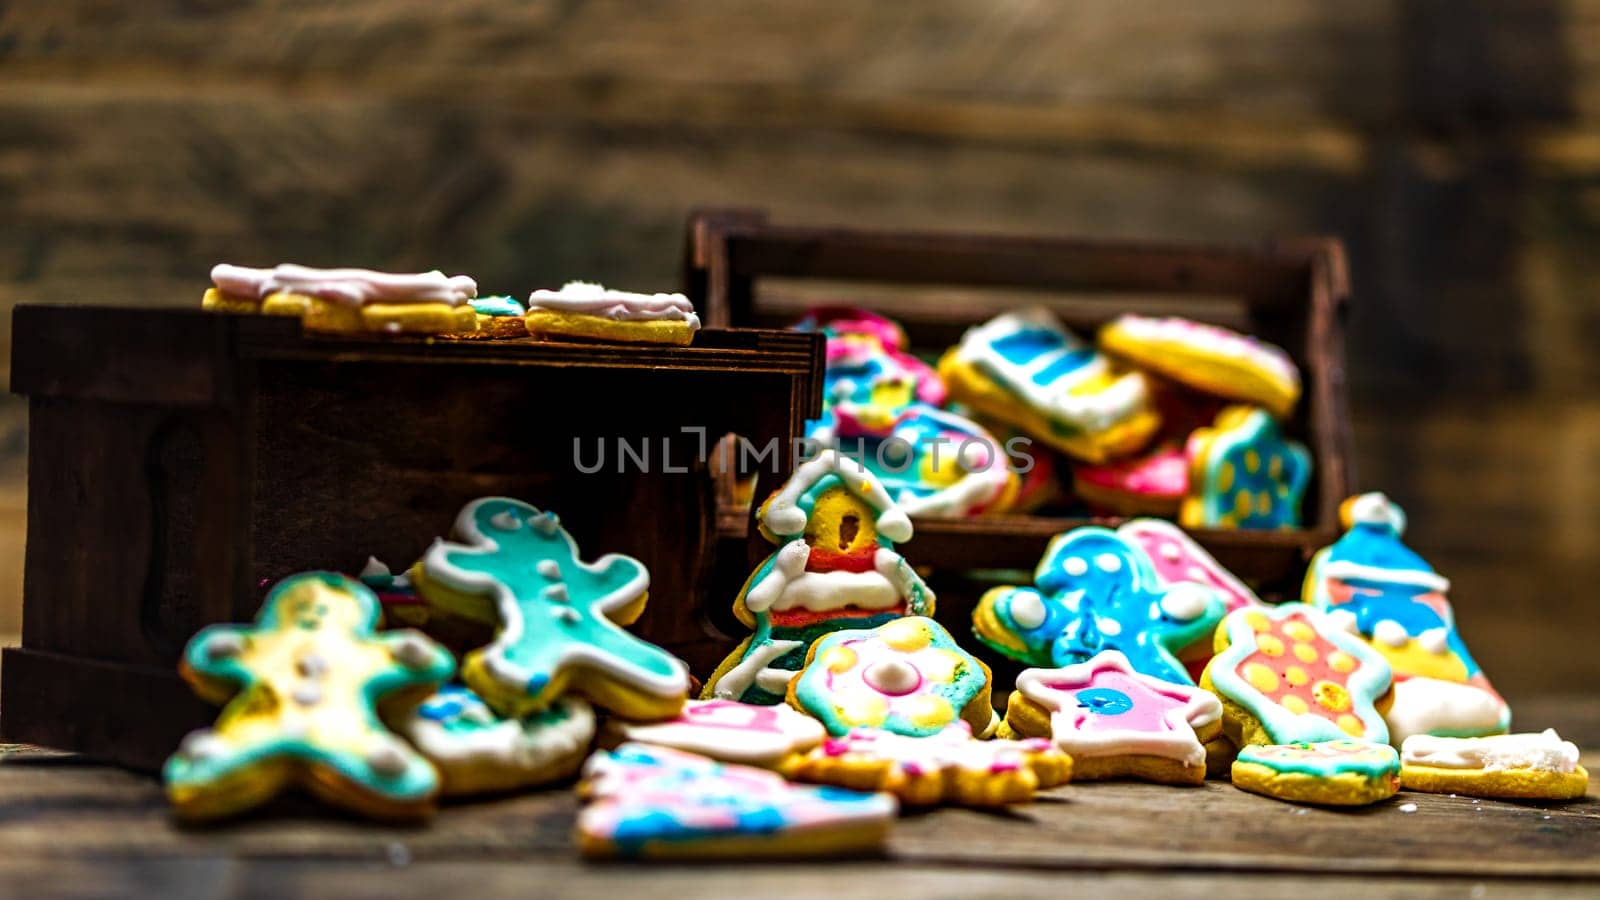 Tasty homemade Christmas cookies on wooden table by vladispas